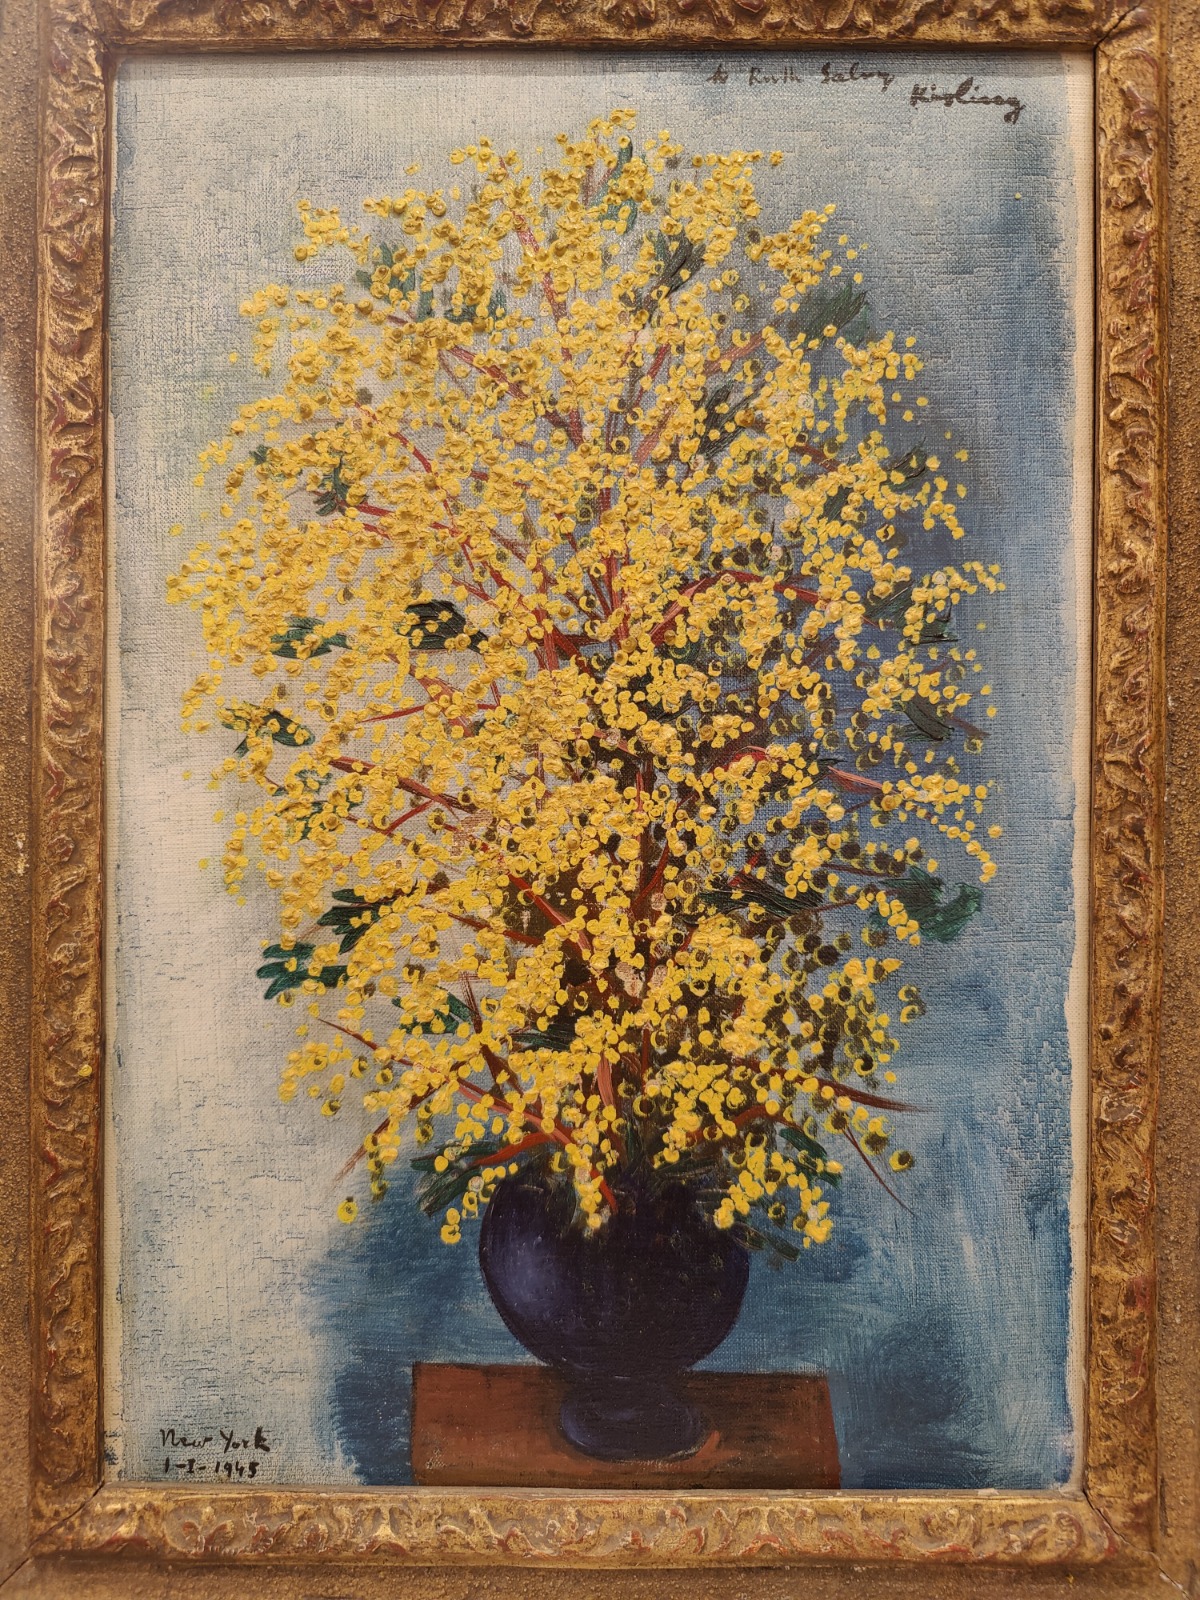 Moïse Kisling - Vase of Mimosa - Oil on canvas - 36x24 cm